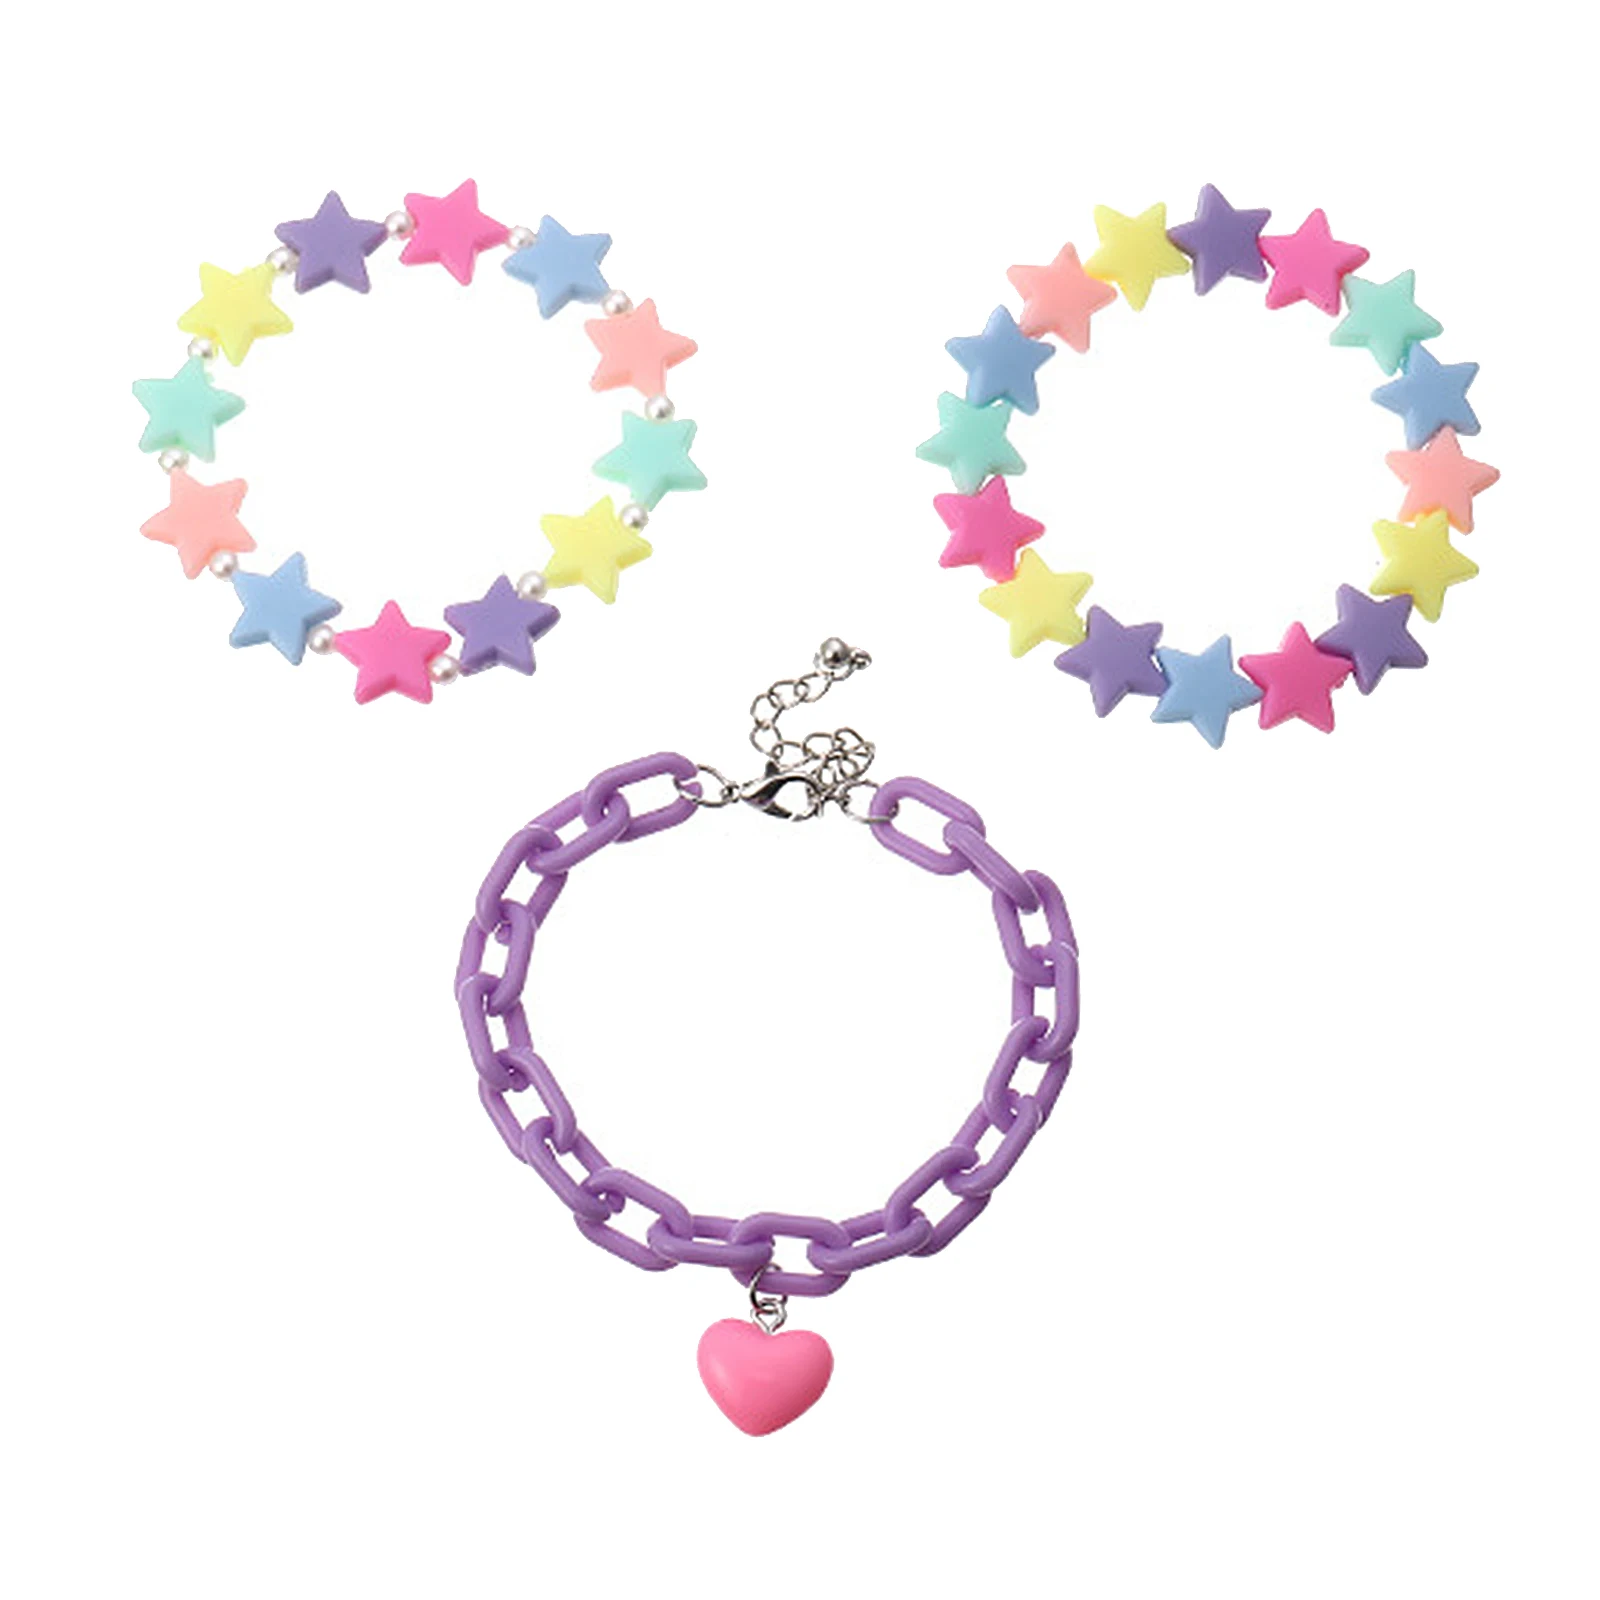 1 Set Colorful Fashionable Bracelets Stars Heart Pearls Bangle Adjustable